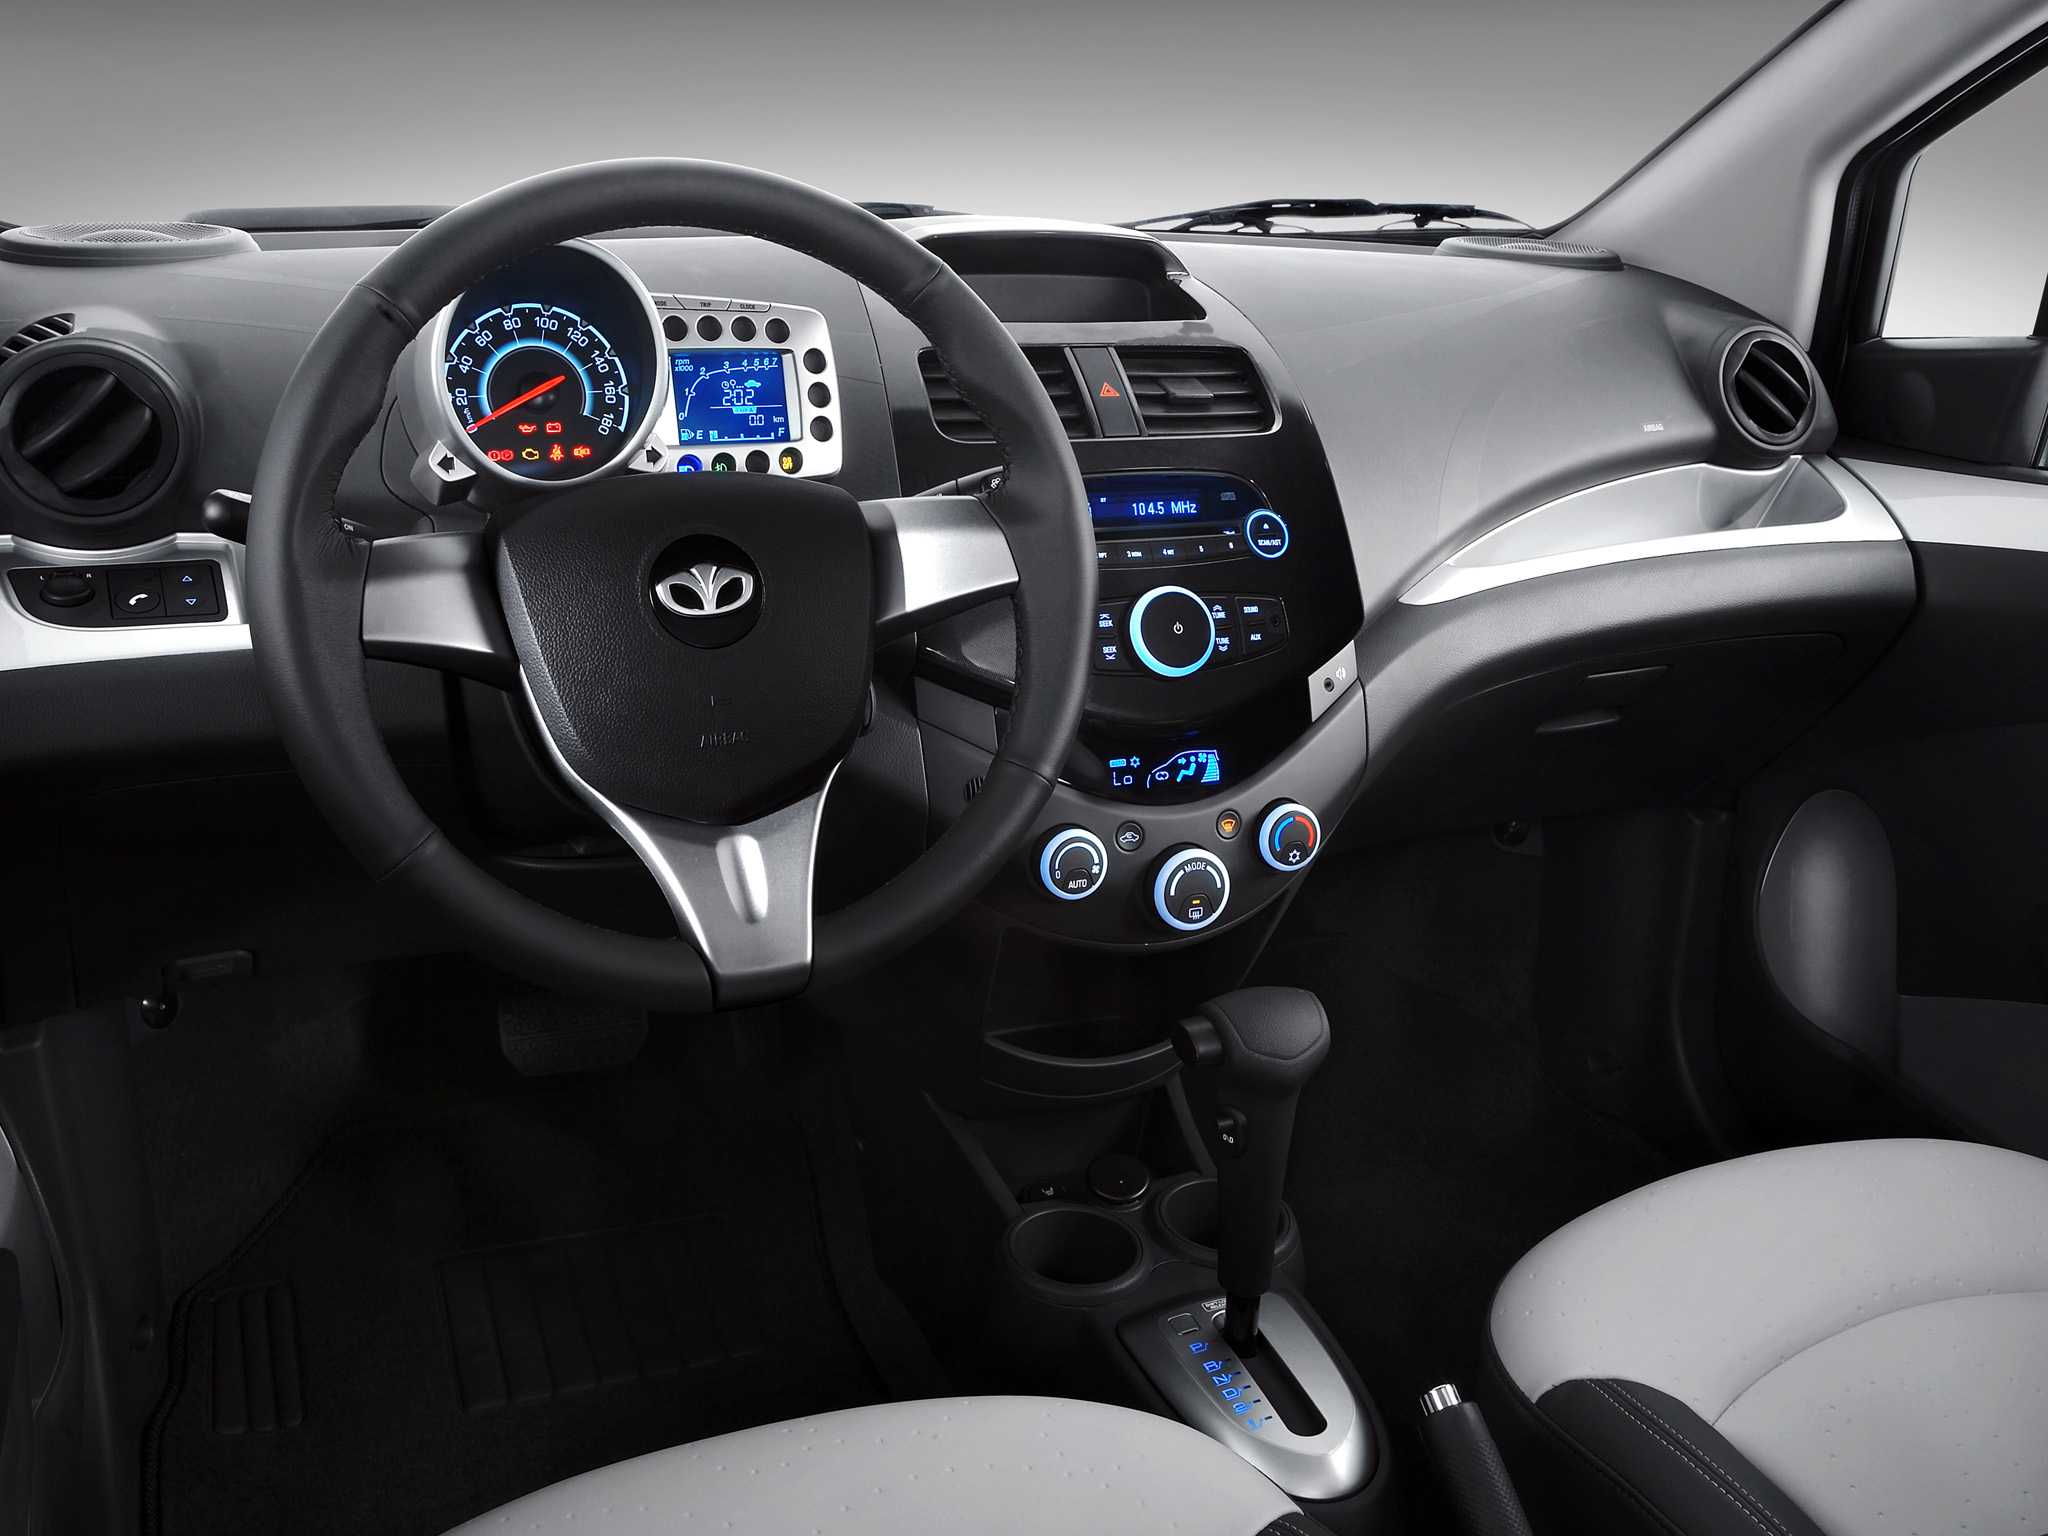 Daewoo Matiz interior - Cockpit